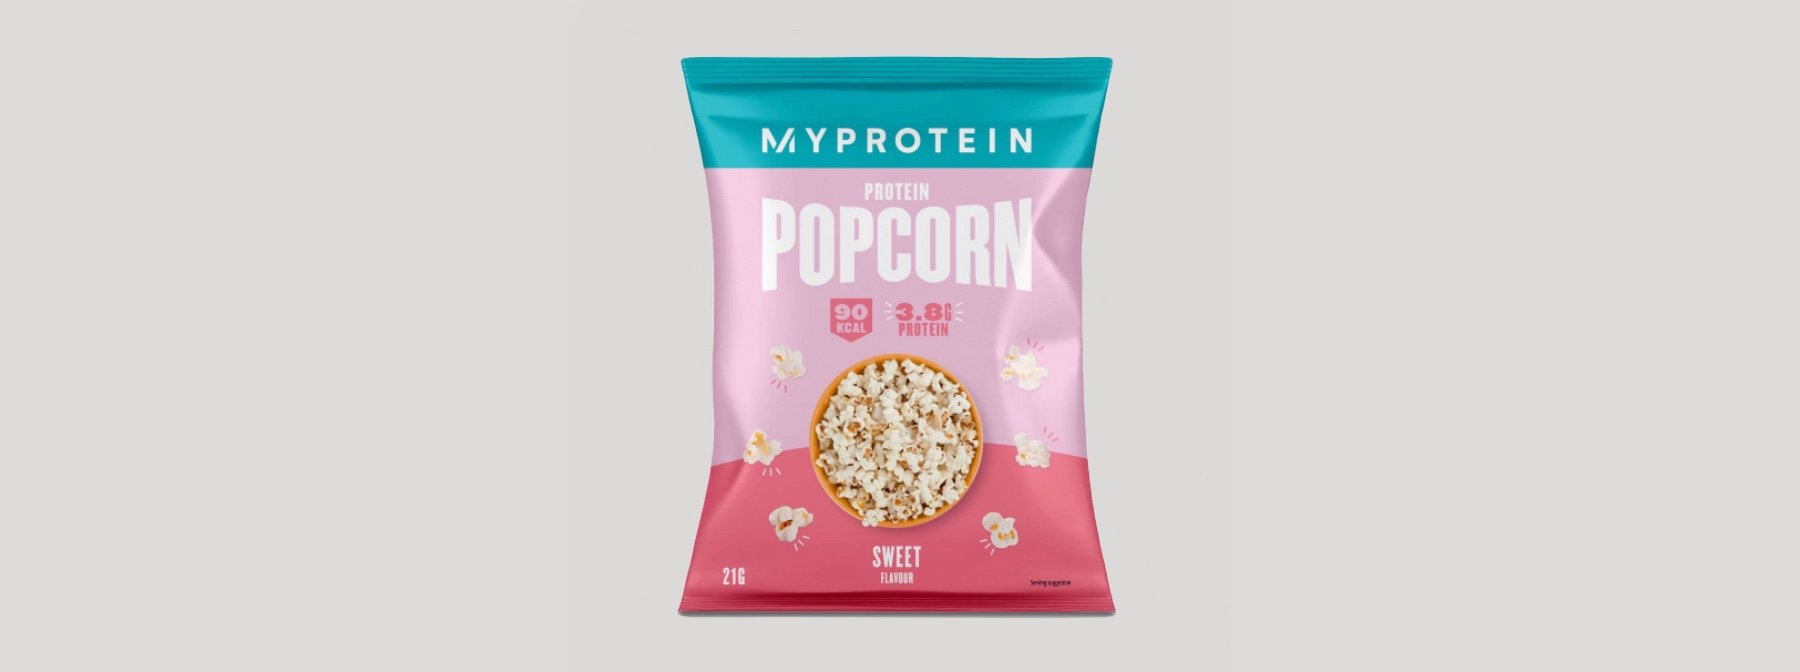 Protein Popcorn (Πρωτεϊνικά Ποπ Κορν): νέο προϊόν της Myprotein